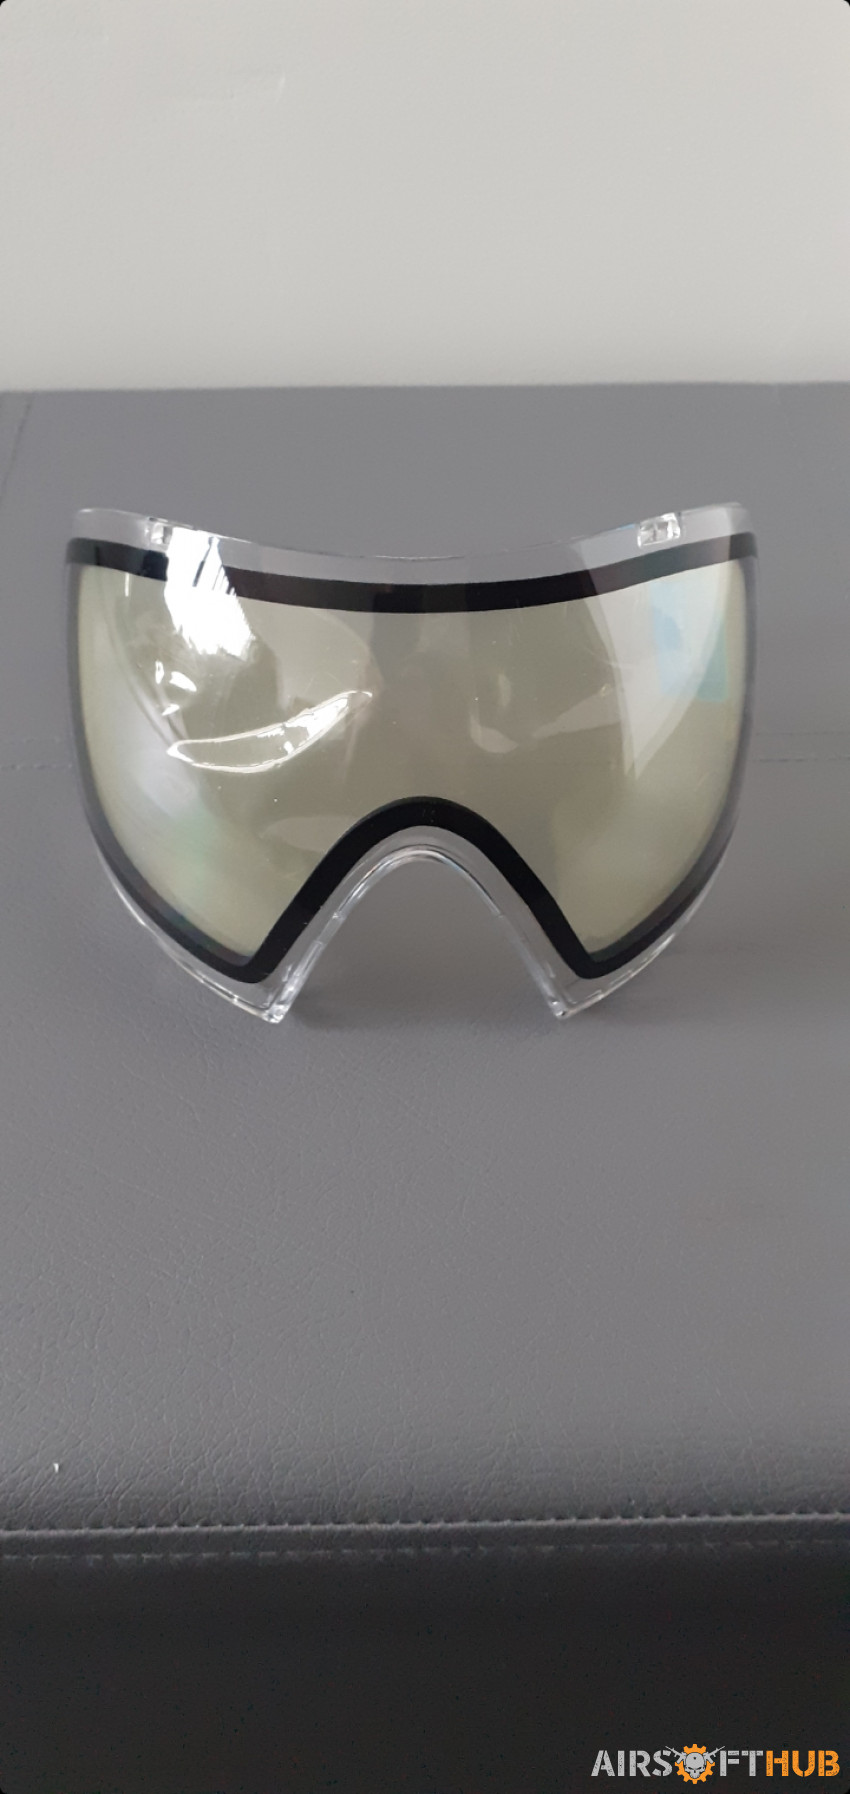 Dye i4 DyeCam Mask - Used airsoft equipment